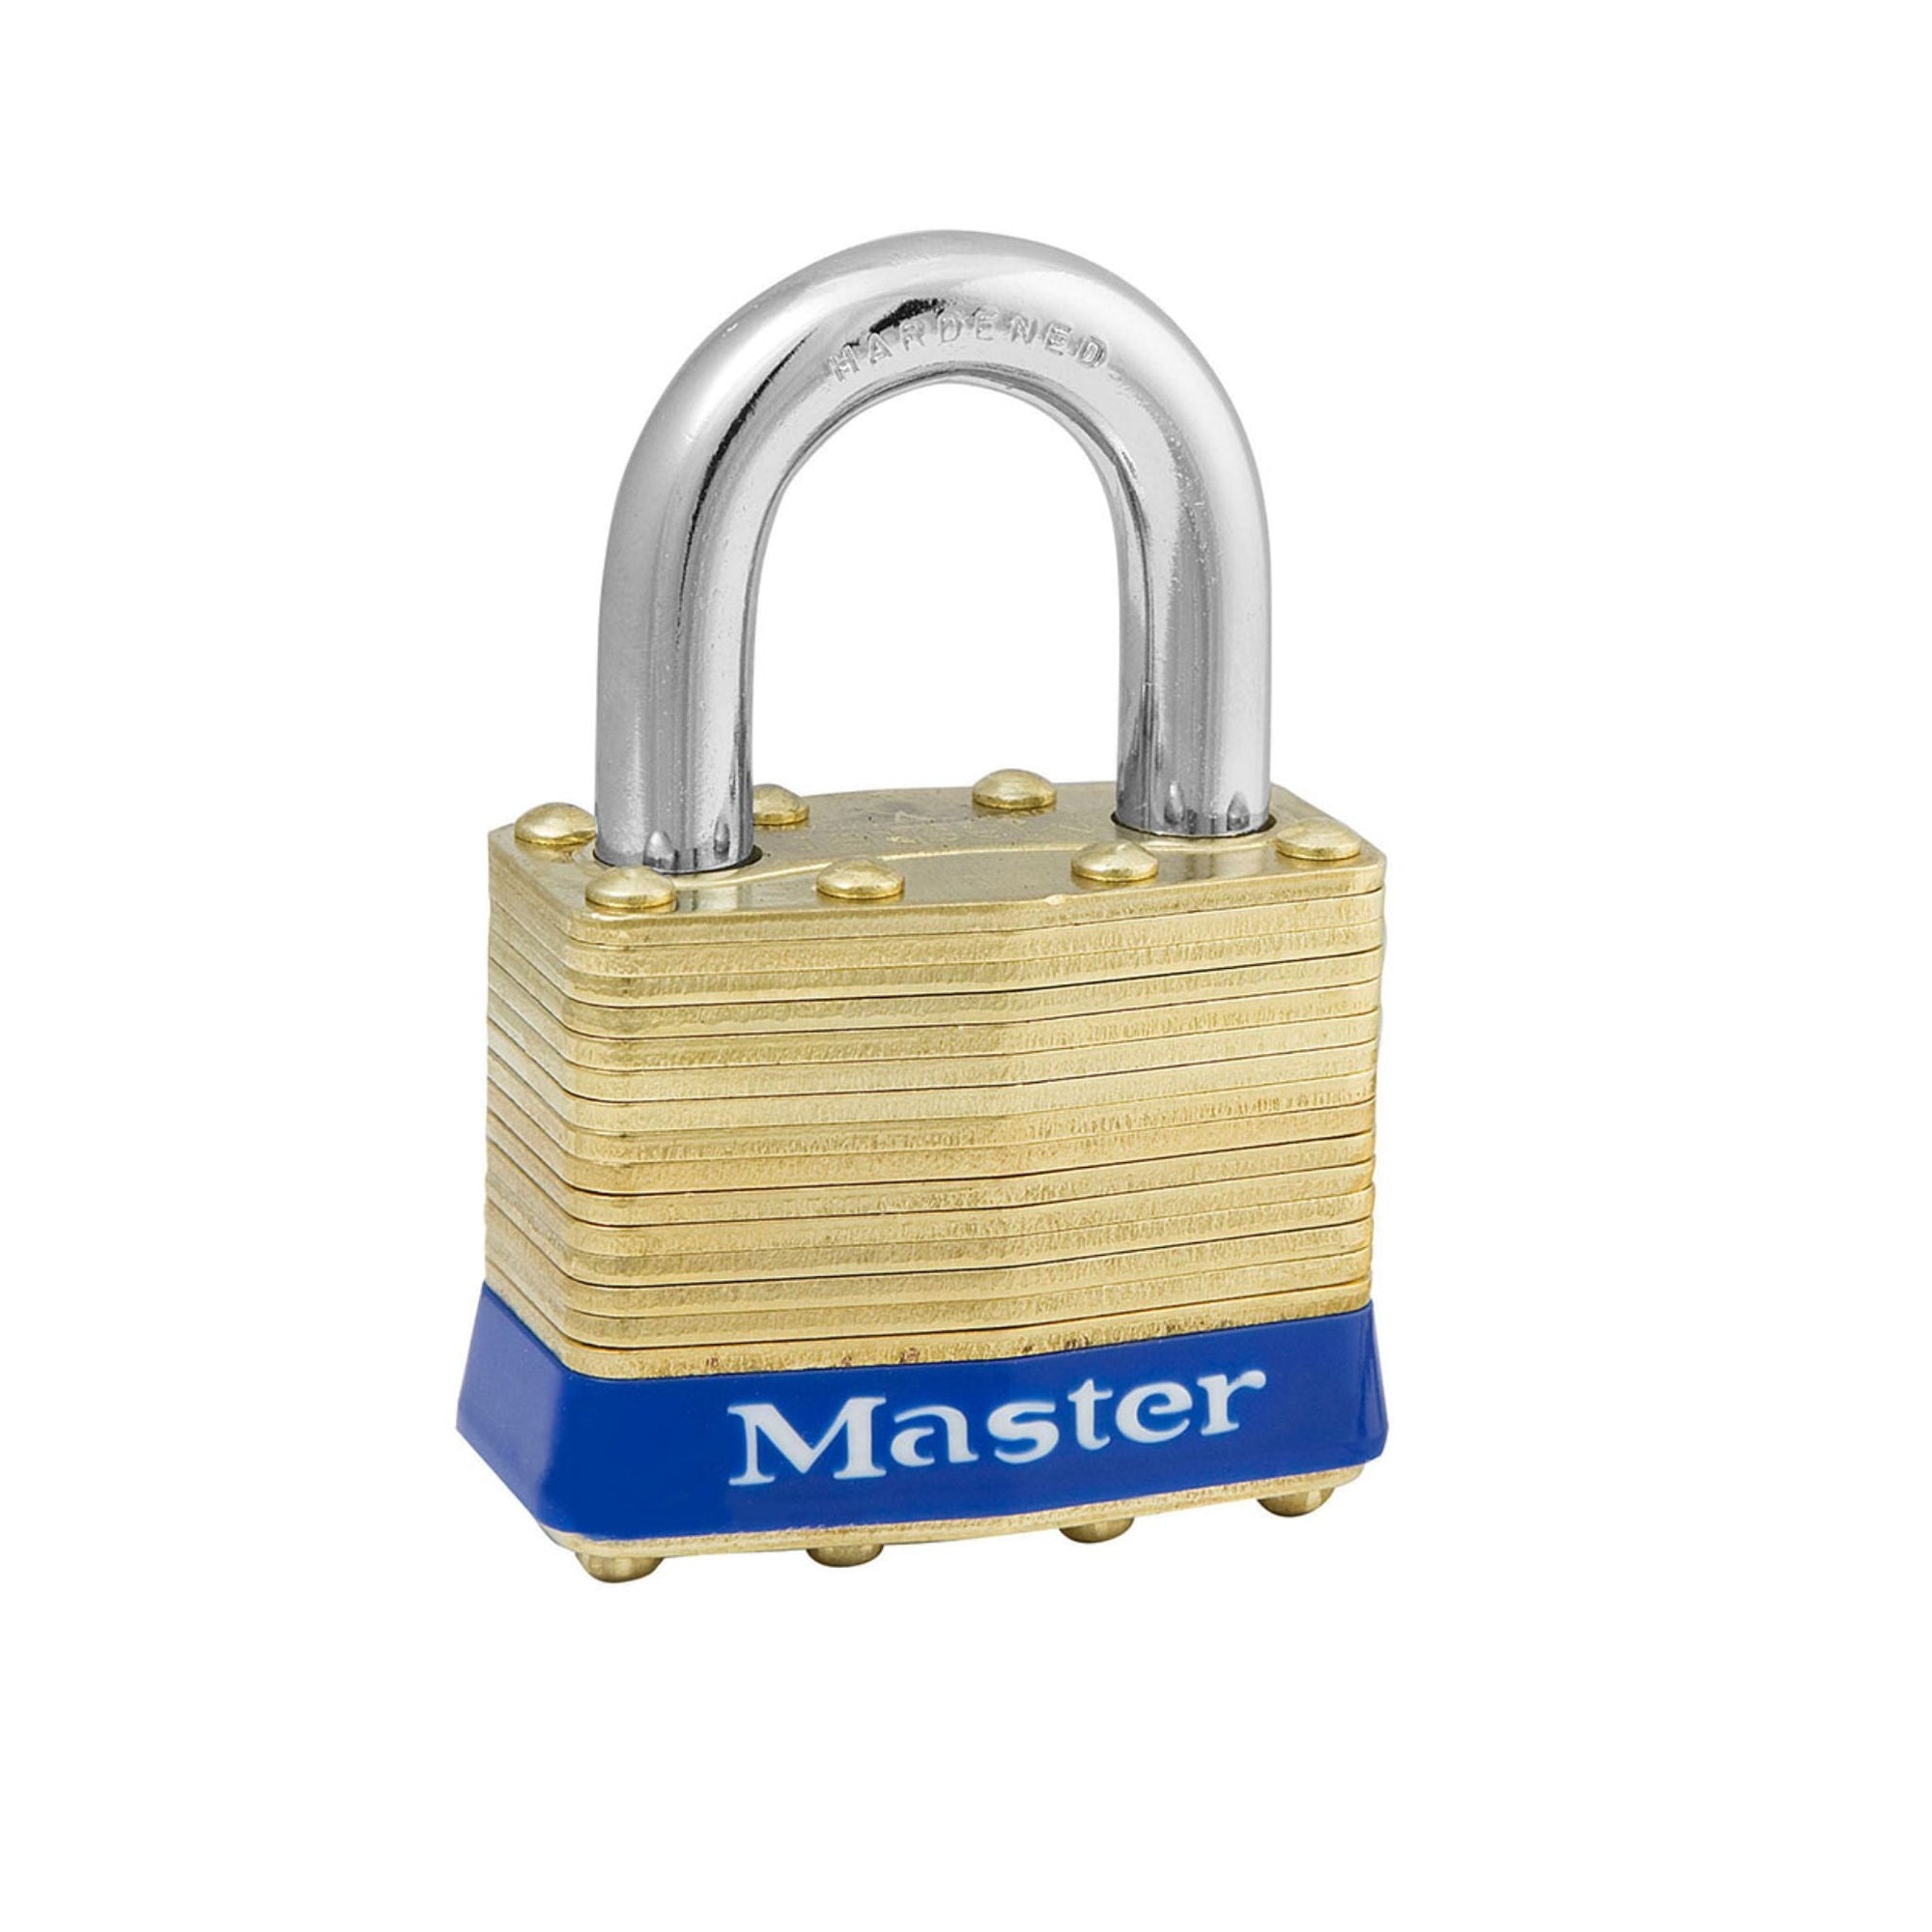 Master Lock 2KA 0323 Lock Laminated brass No. 2 Series Padlock Keyed to Match Existing Key Number KA0323 - The Lock Source